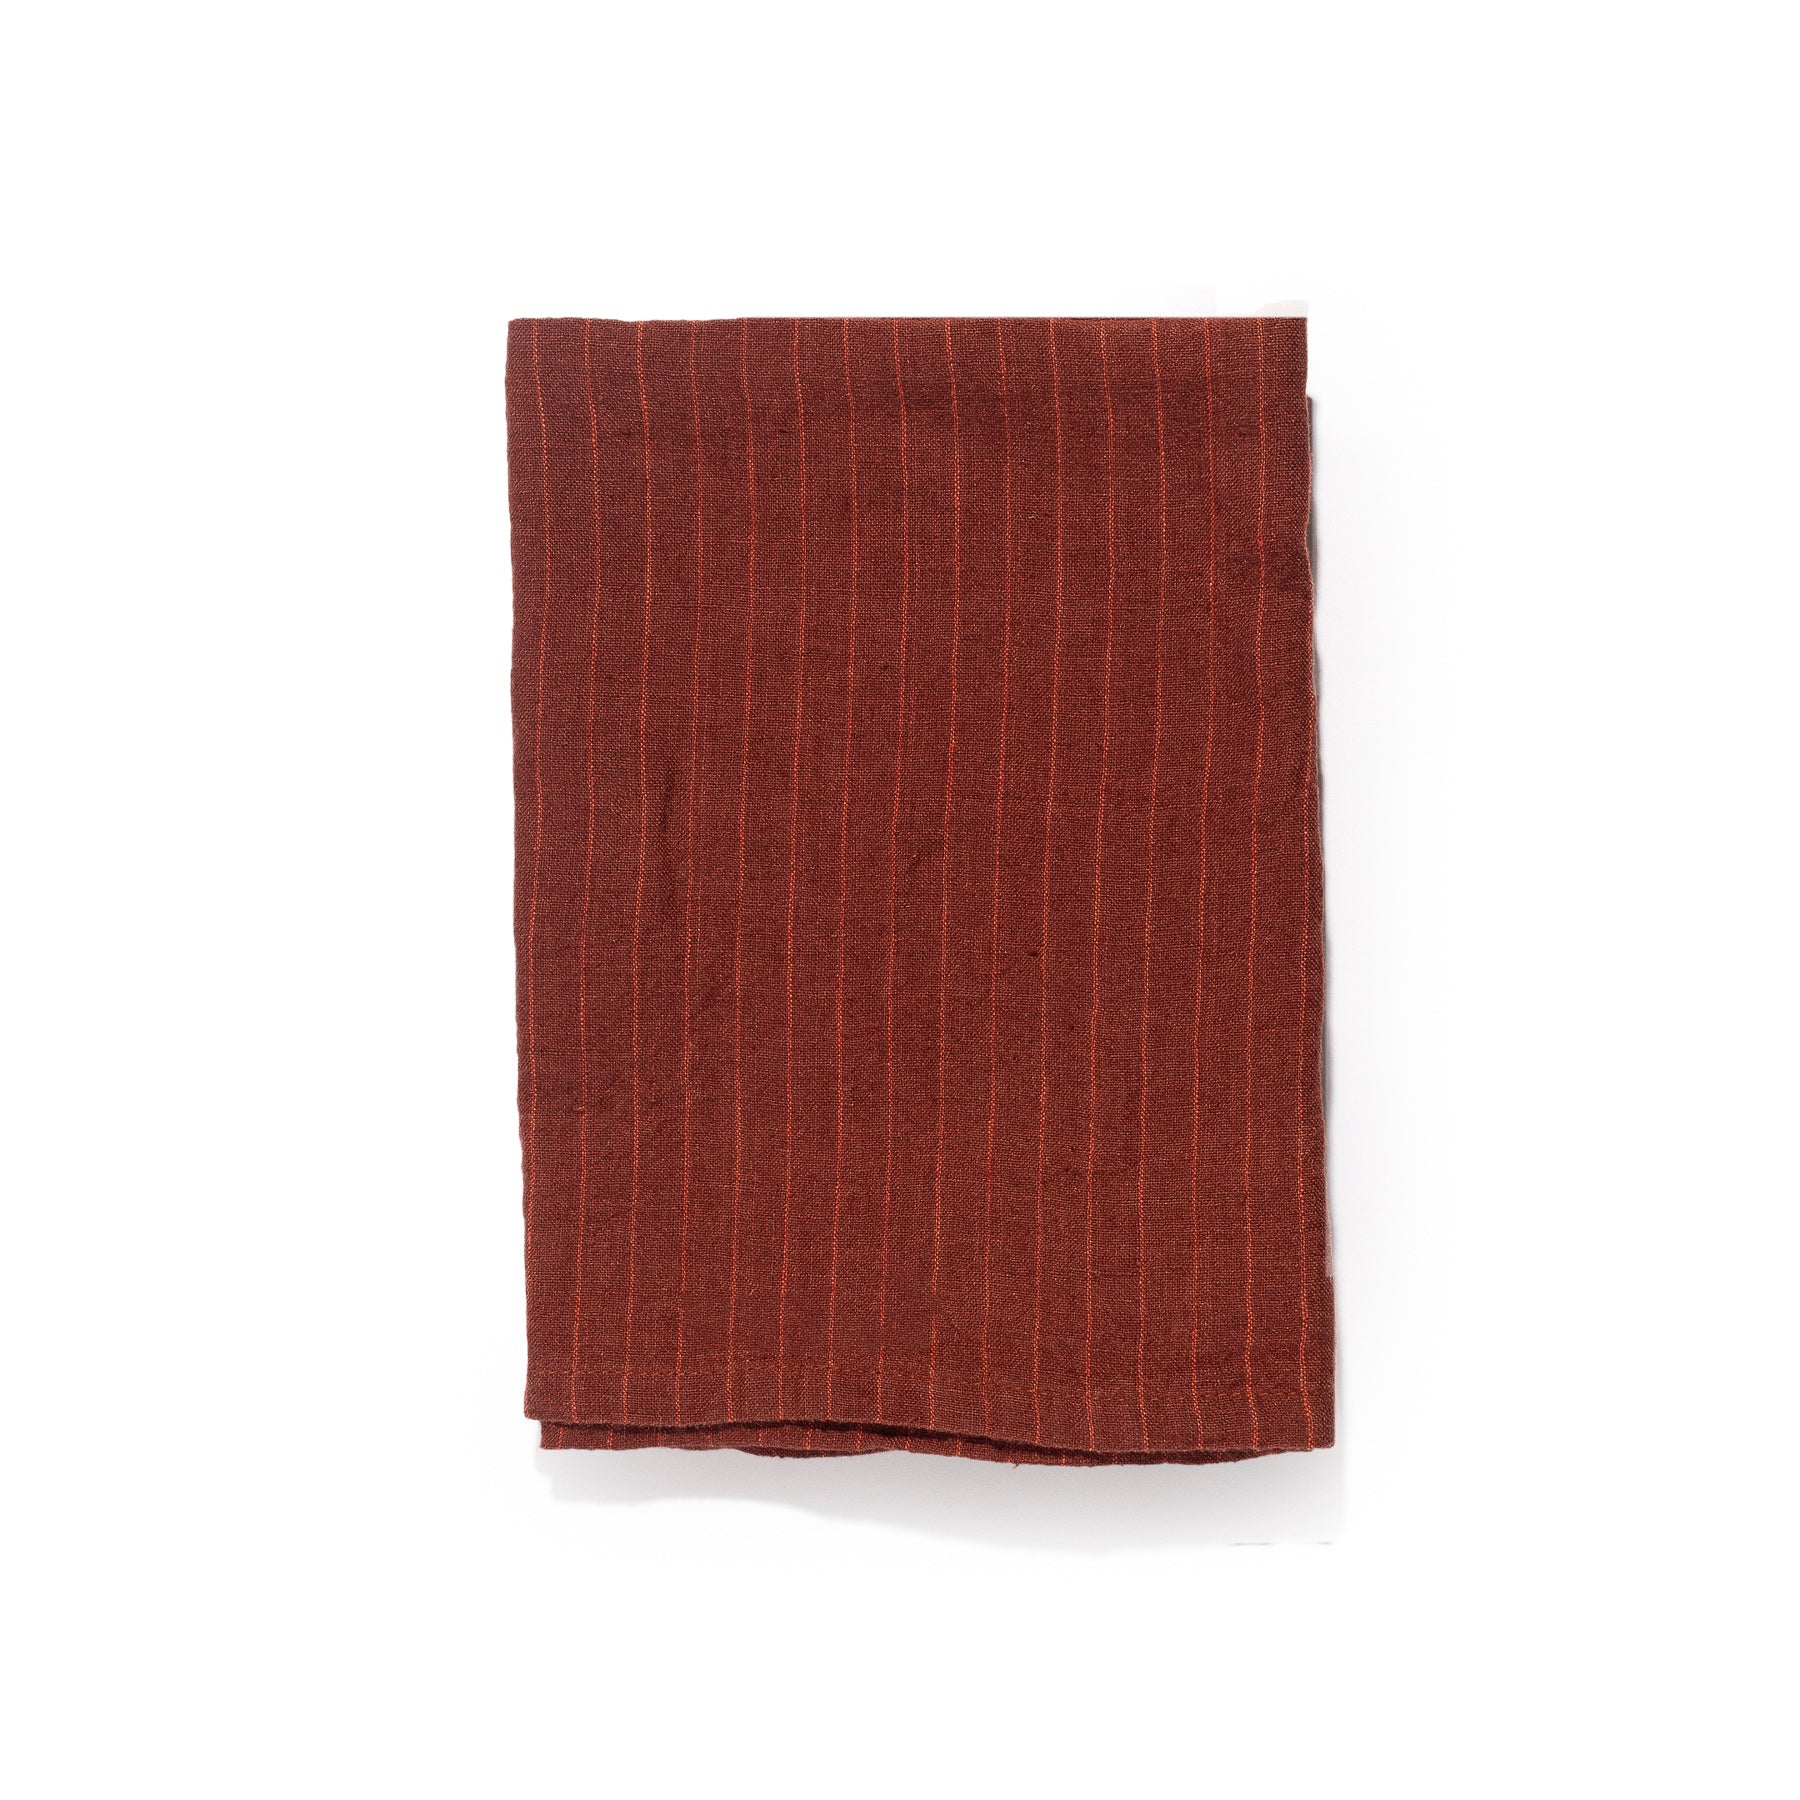 Gable Clay Striped Linen Towel